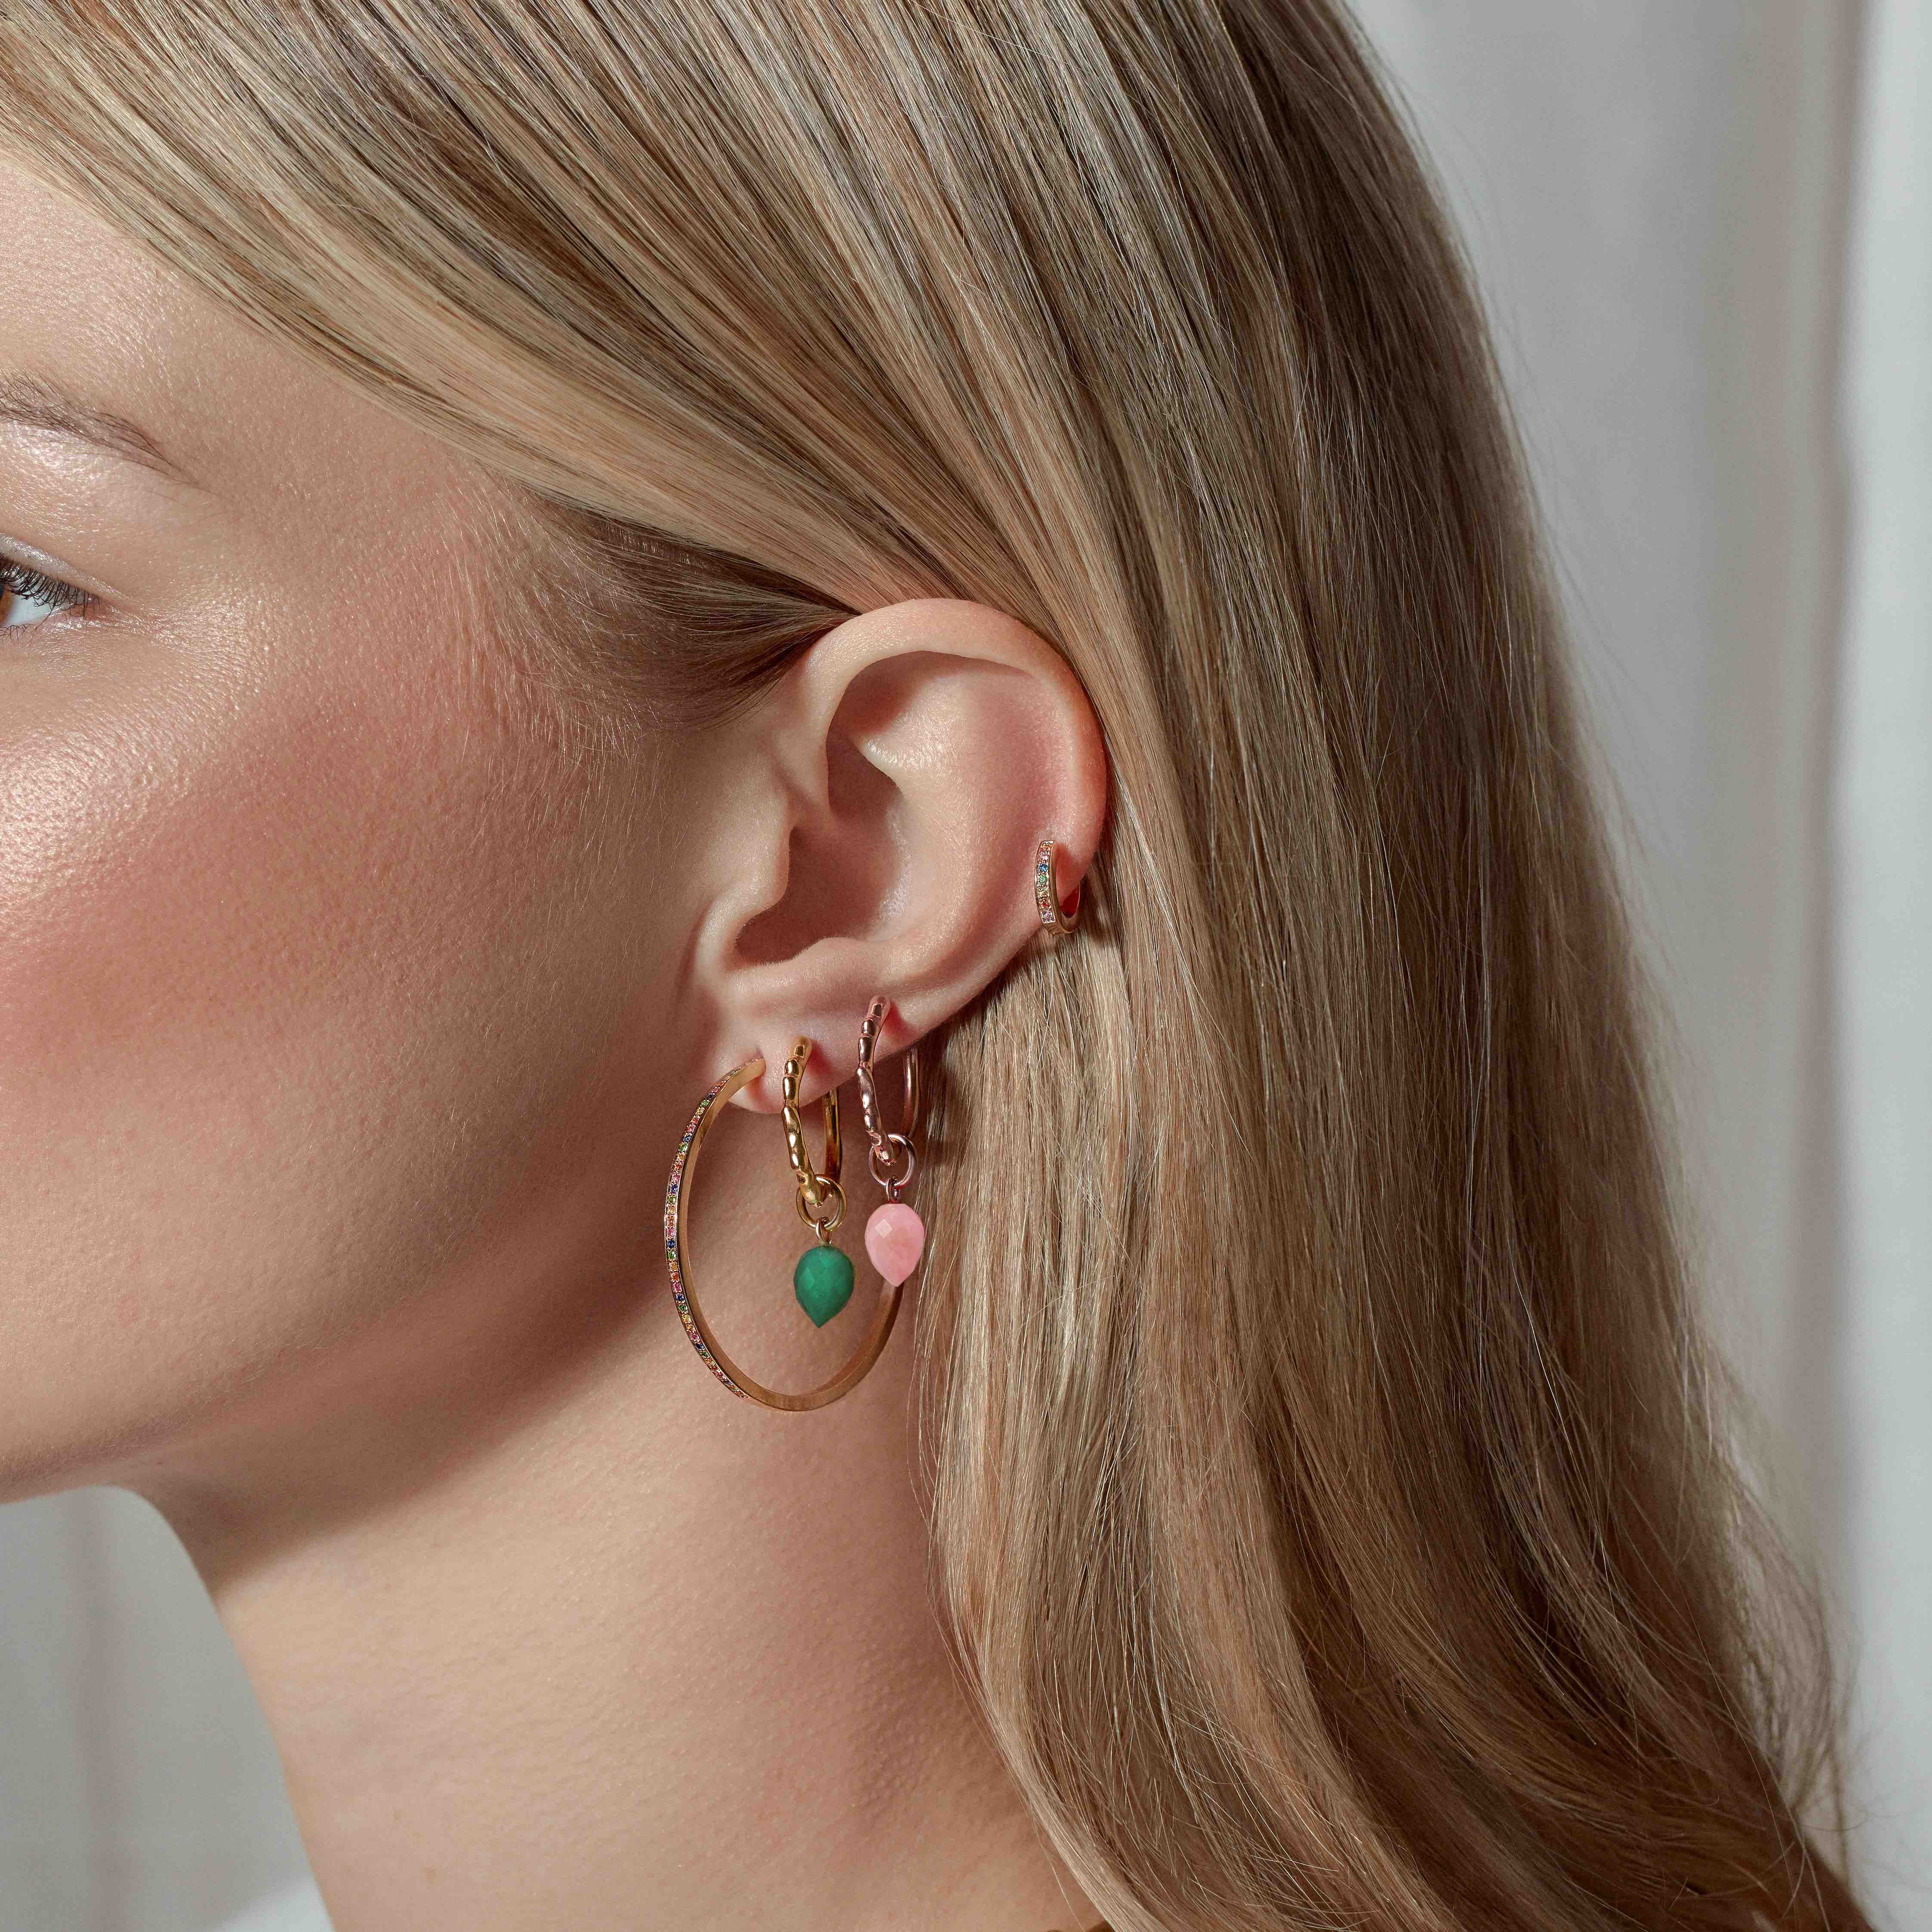 Share more than 160 2 lobe piercing earrings